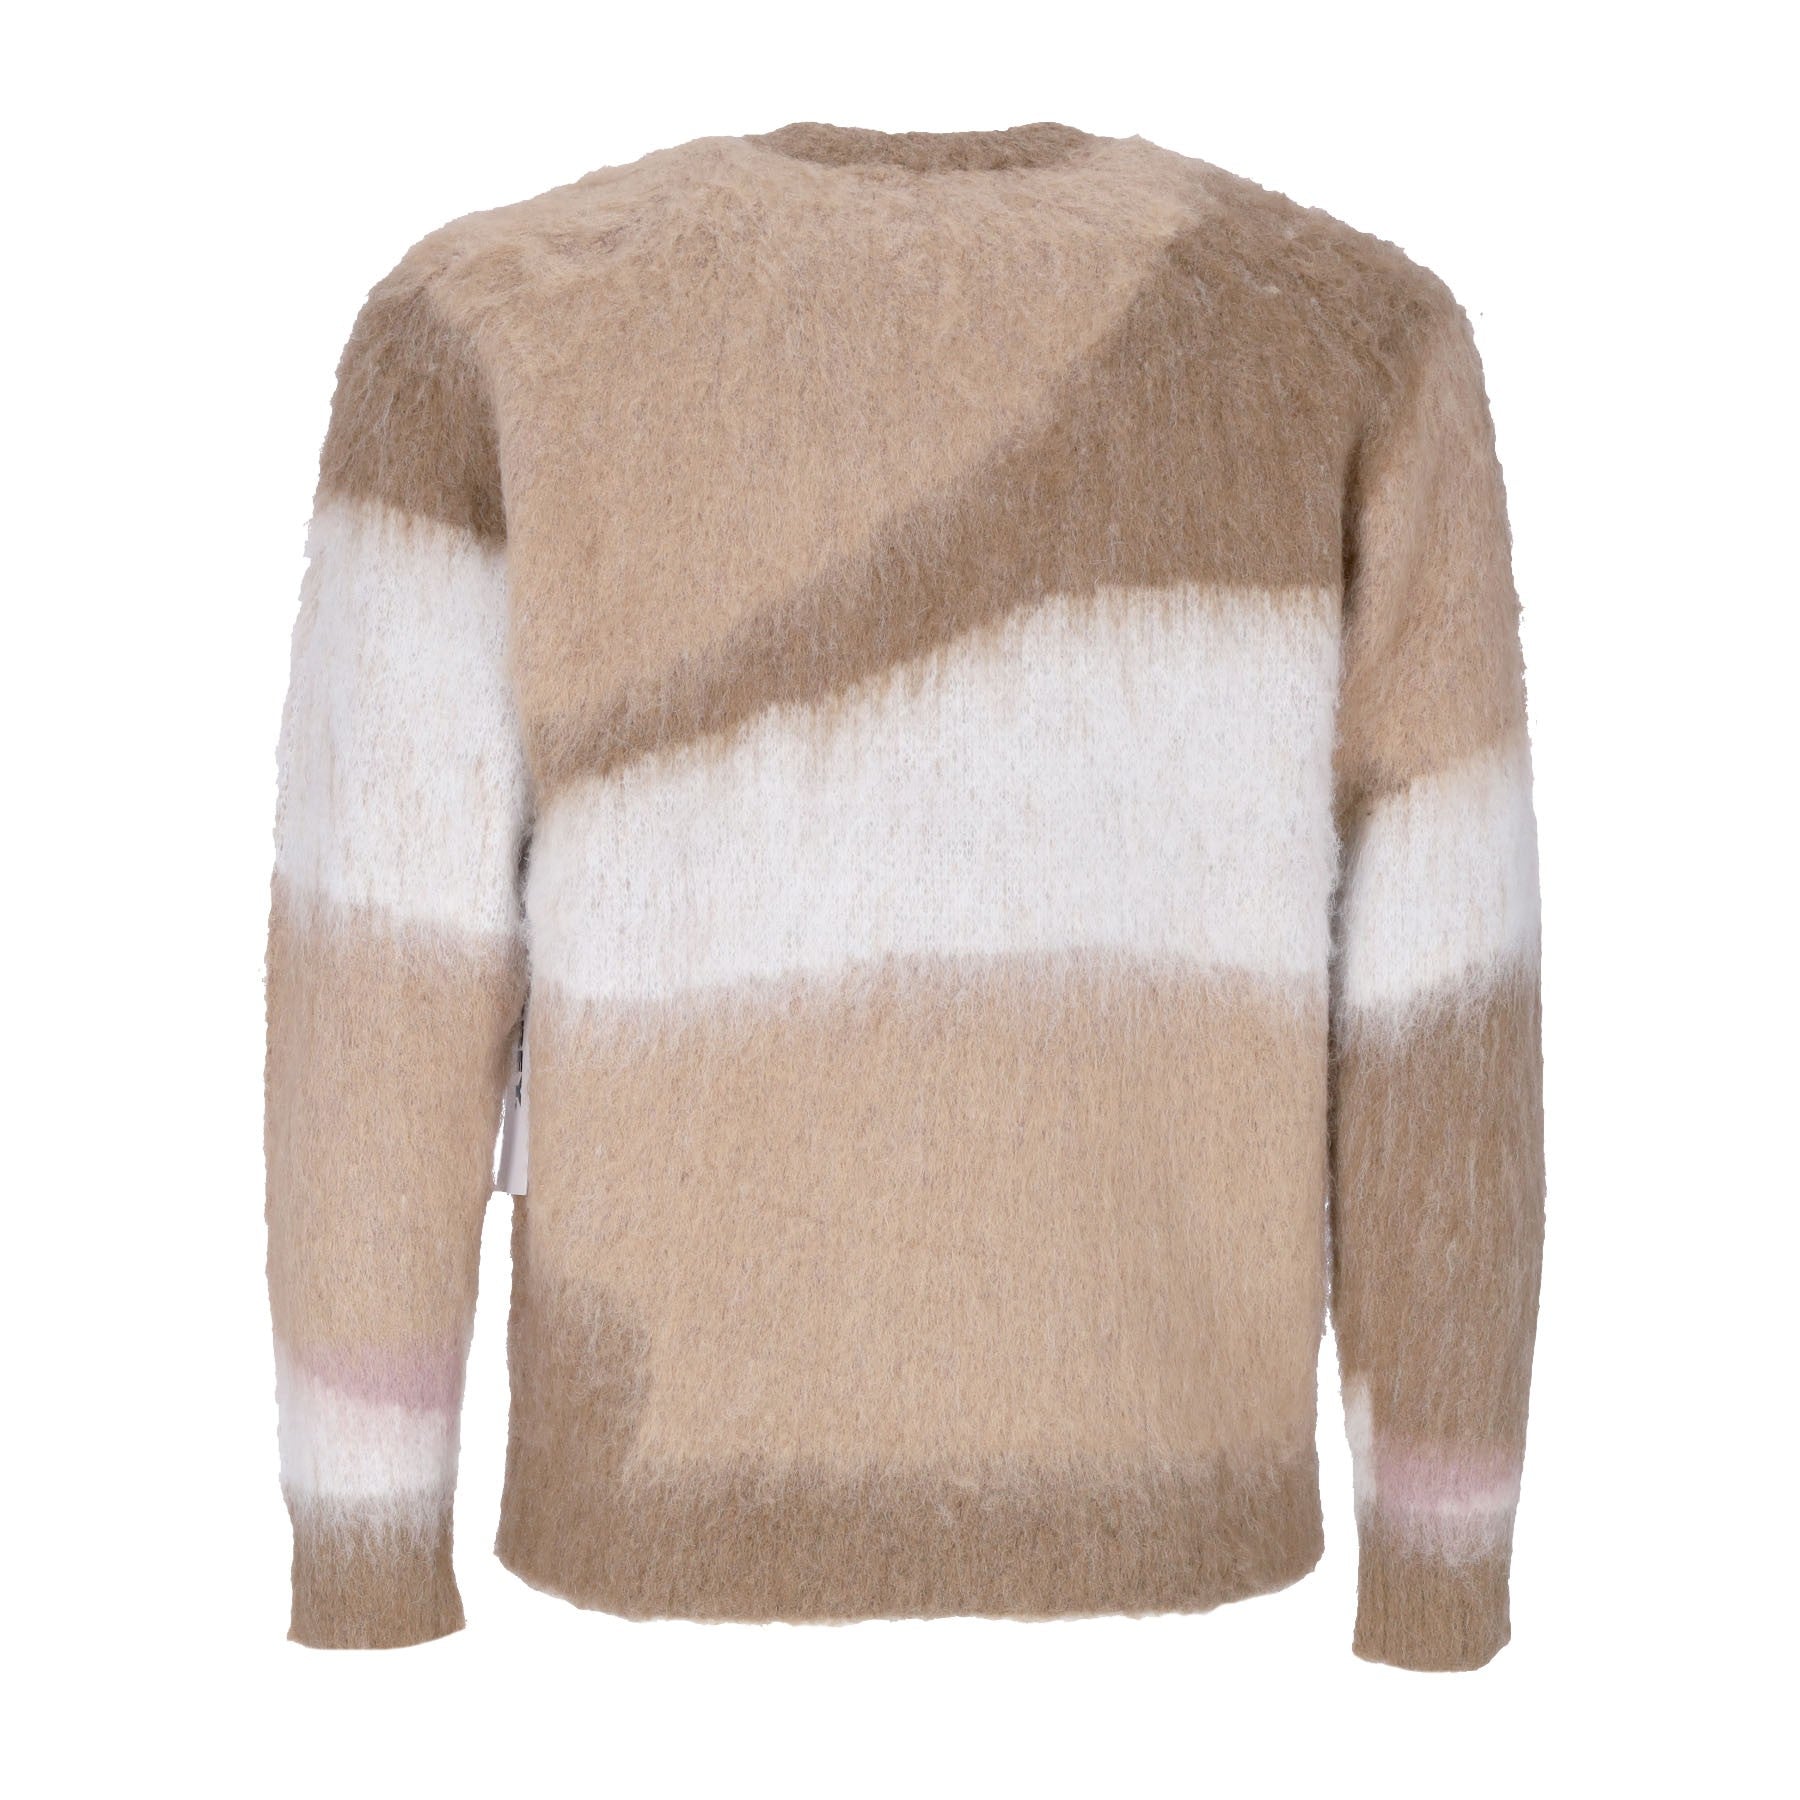 Idlewood Sweater Stucco Men's Sweater Multi